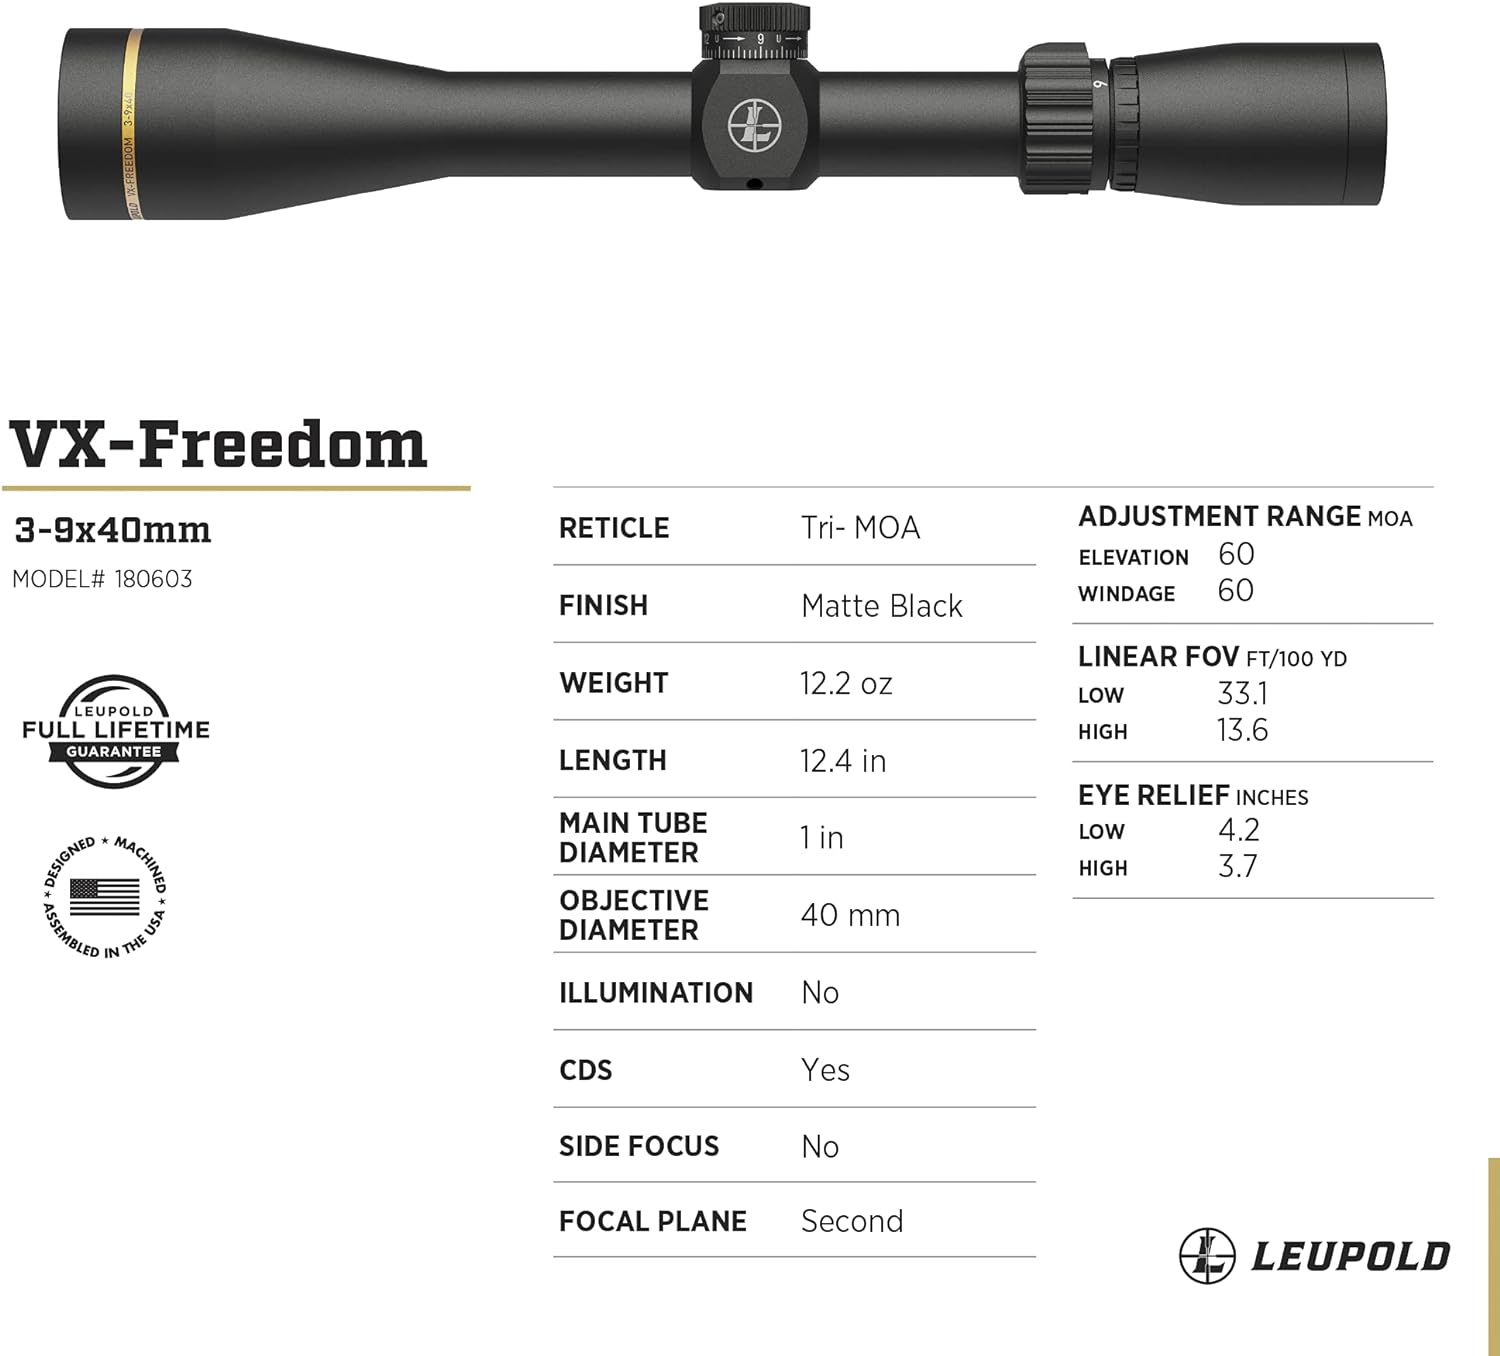 Leupold VX-Freedom 3-9x40mm Riflescope - Leupold VX-Freedom 3-9x40mm Riflescope Review